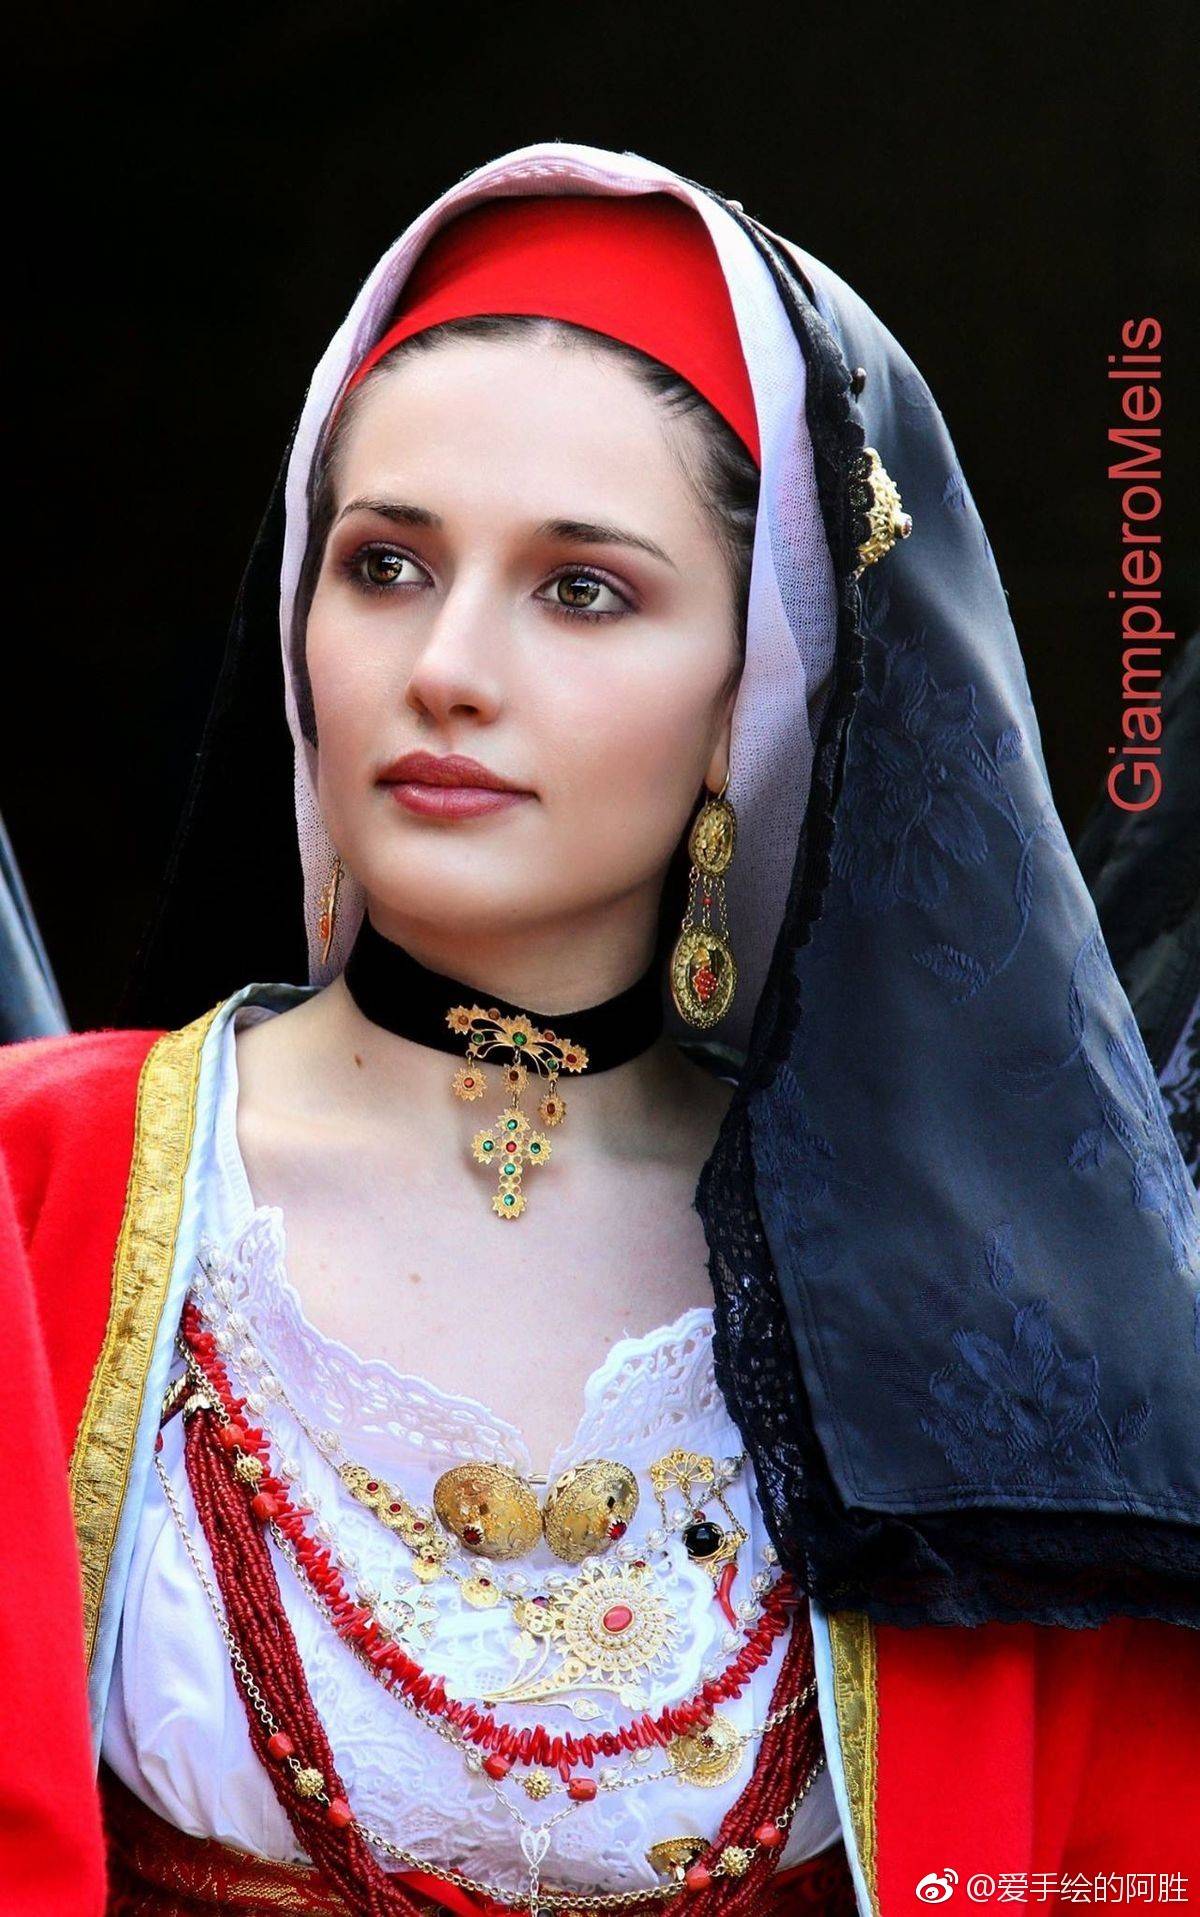 [cp]看过那么多欧洲民族服饰照片,感觉意大利是美女最多的国家了,一个